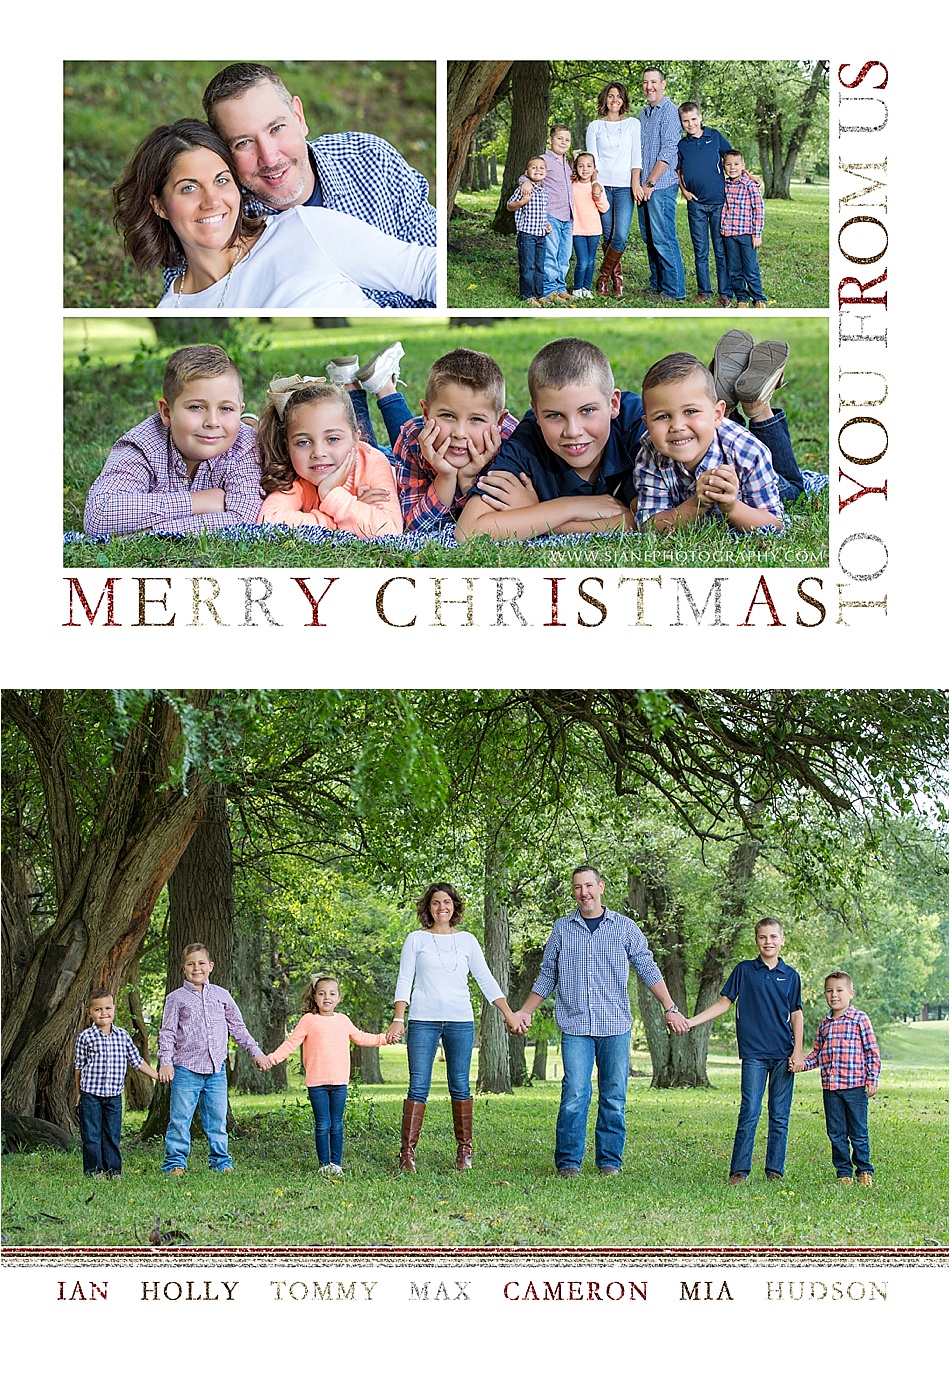 family christmas cards, cards, card designs, holiday cards, best card designs 2017, christmas cards, do you sent christmas cards